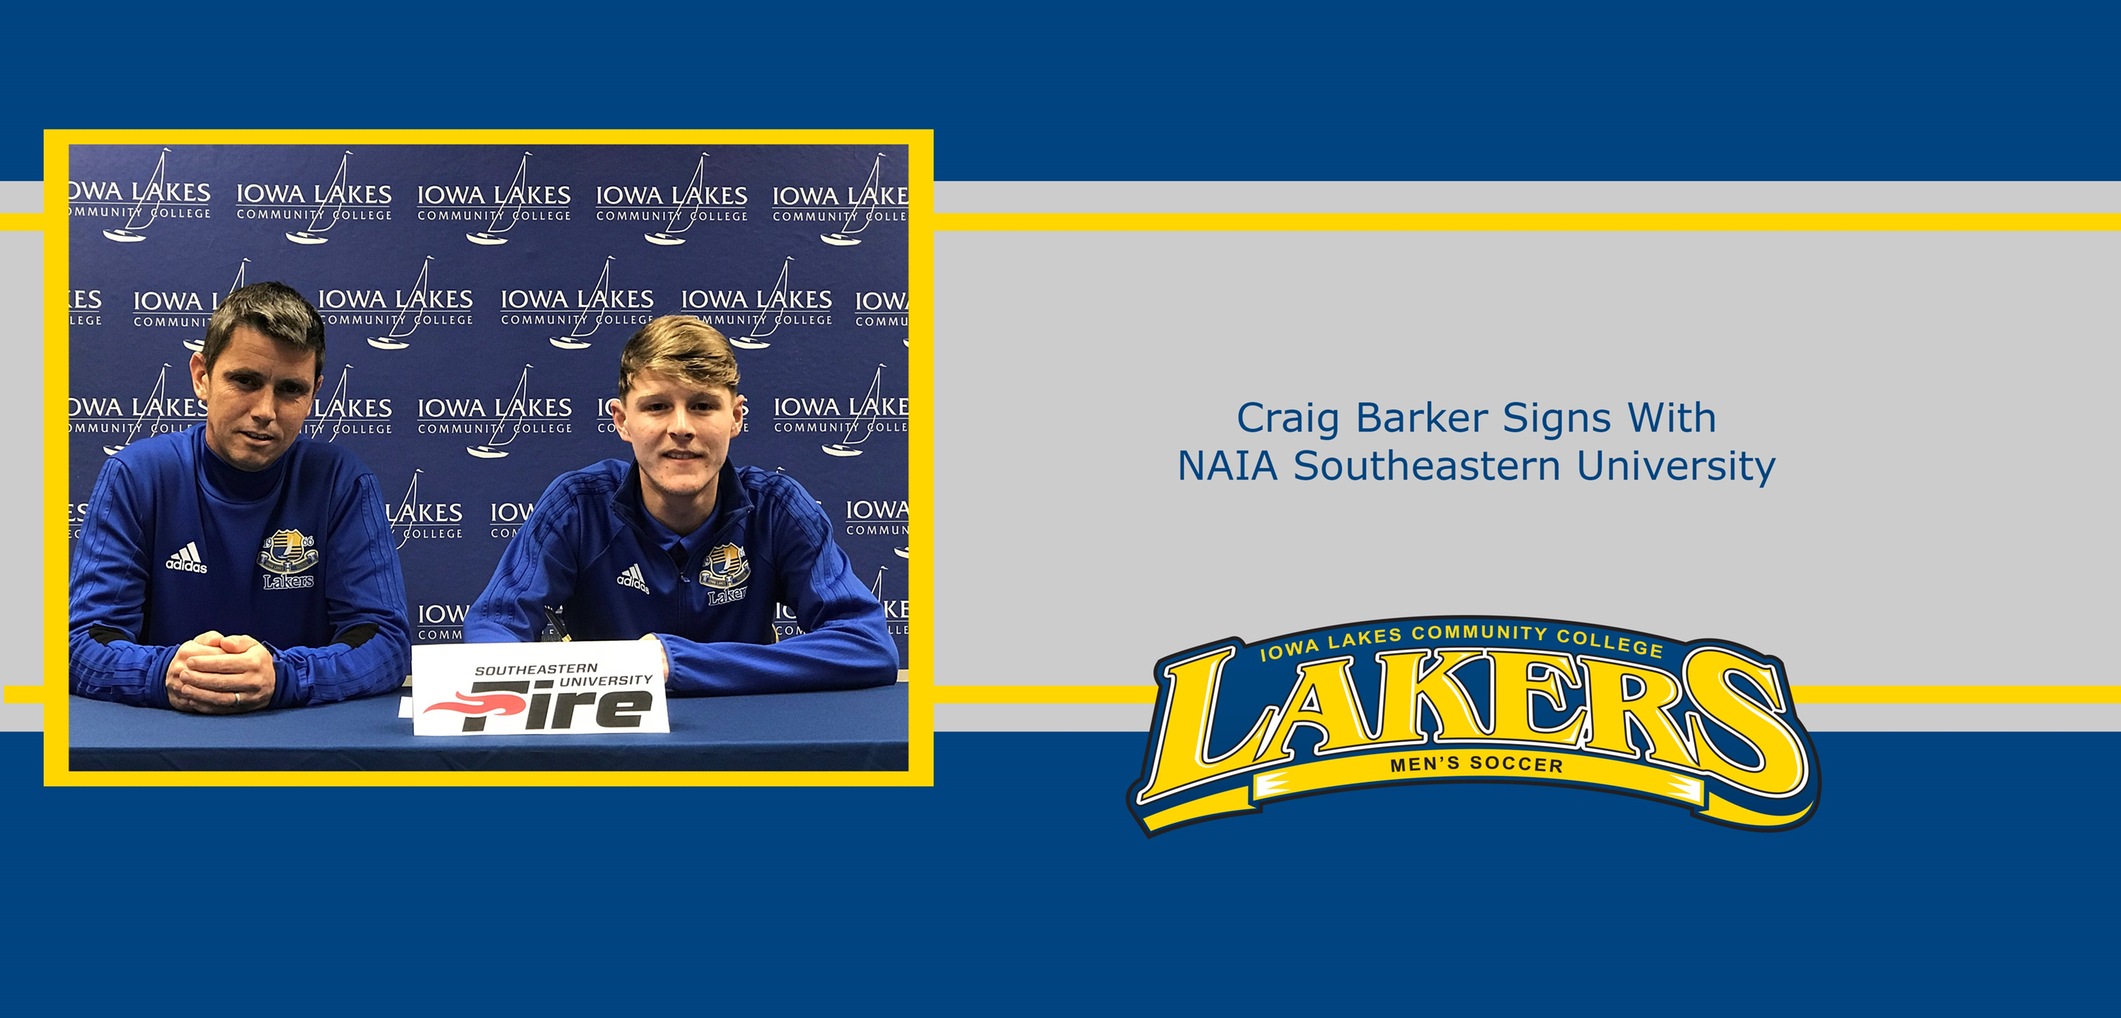 Craig Barker signs with NAIA Southeastern University